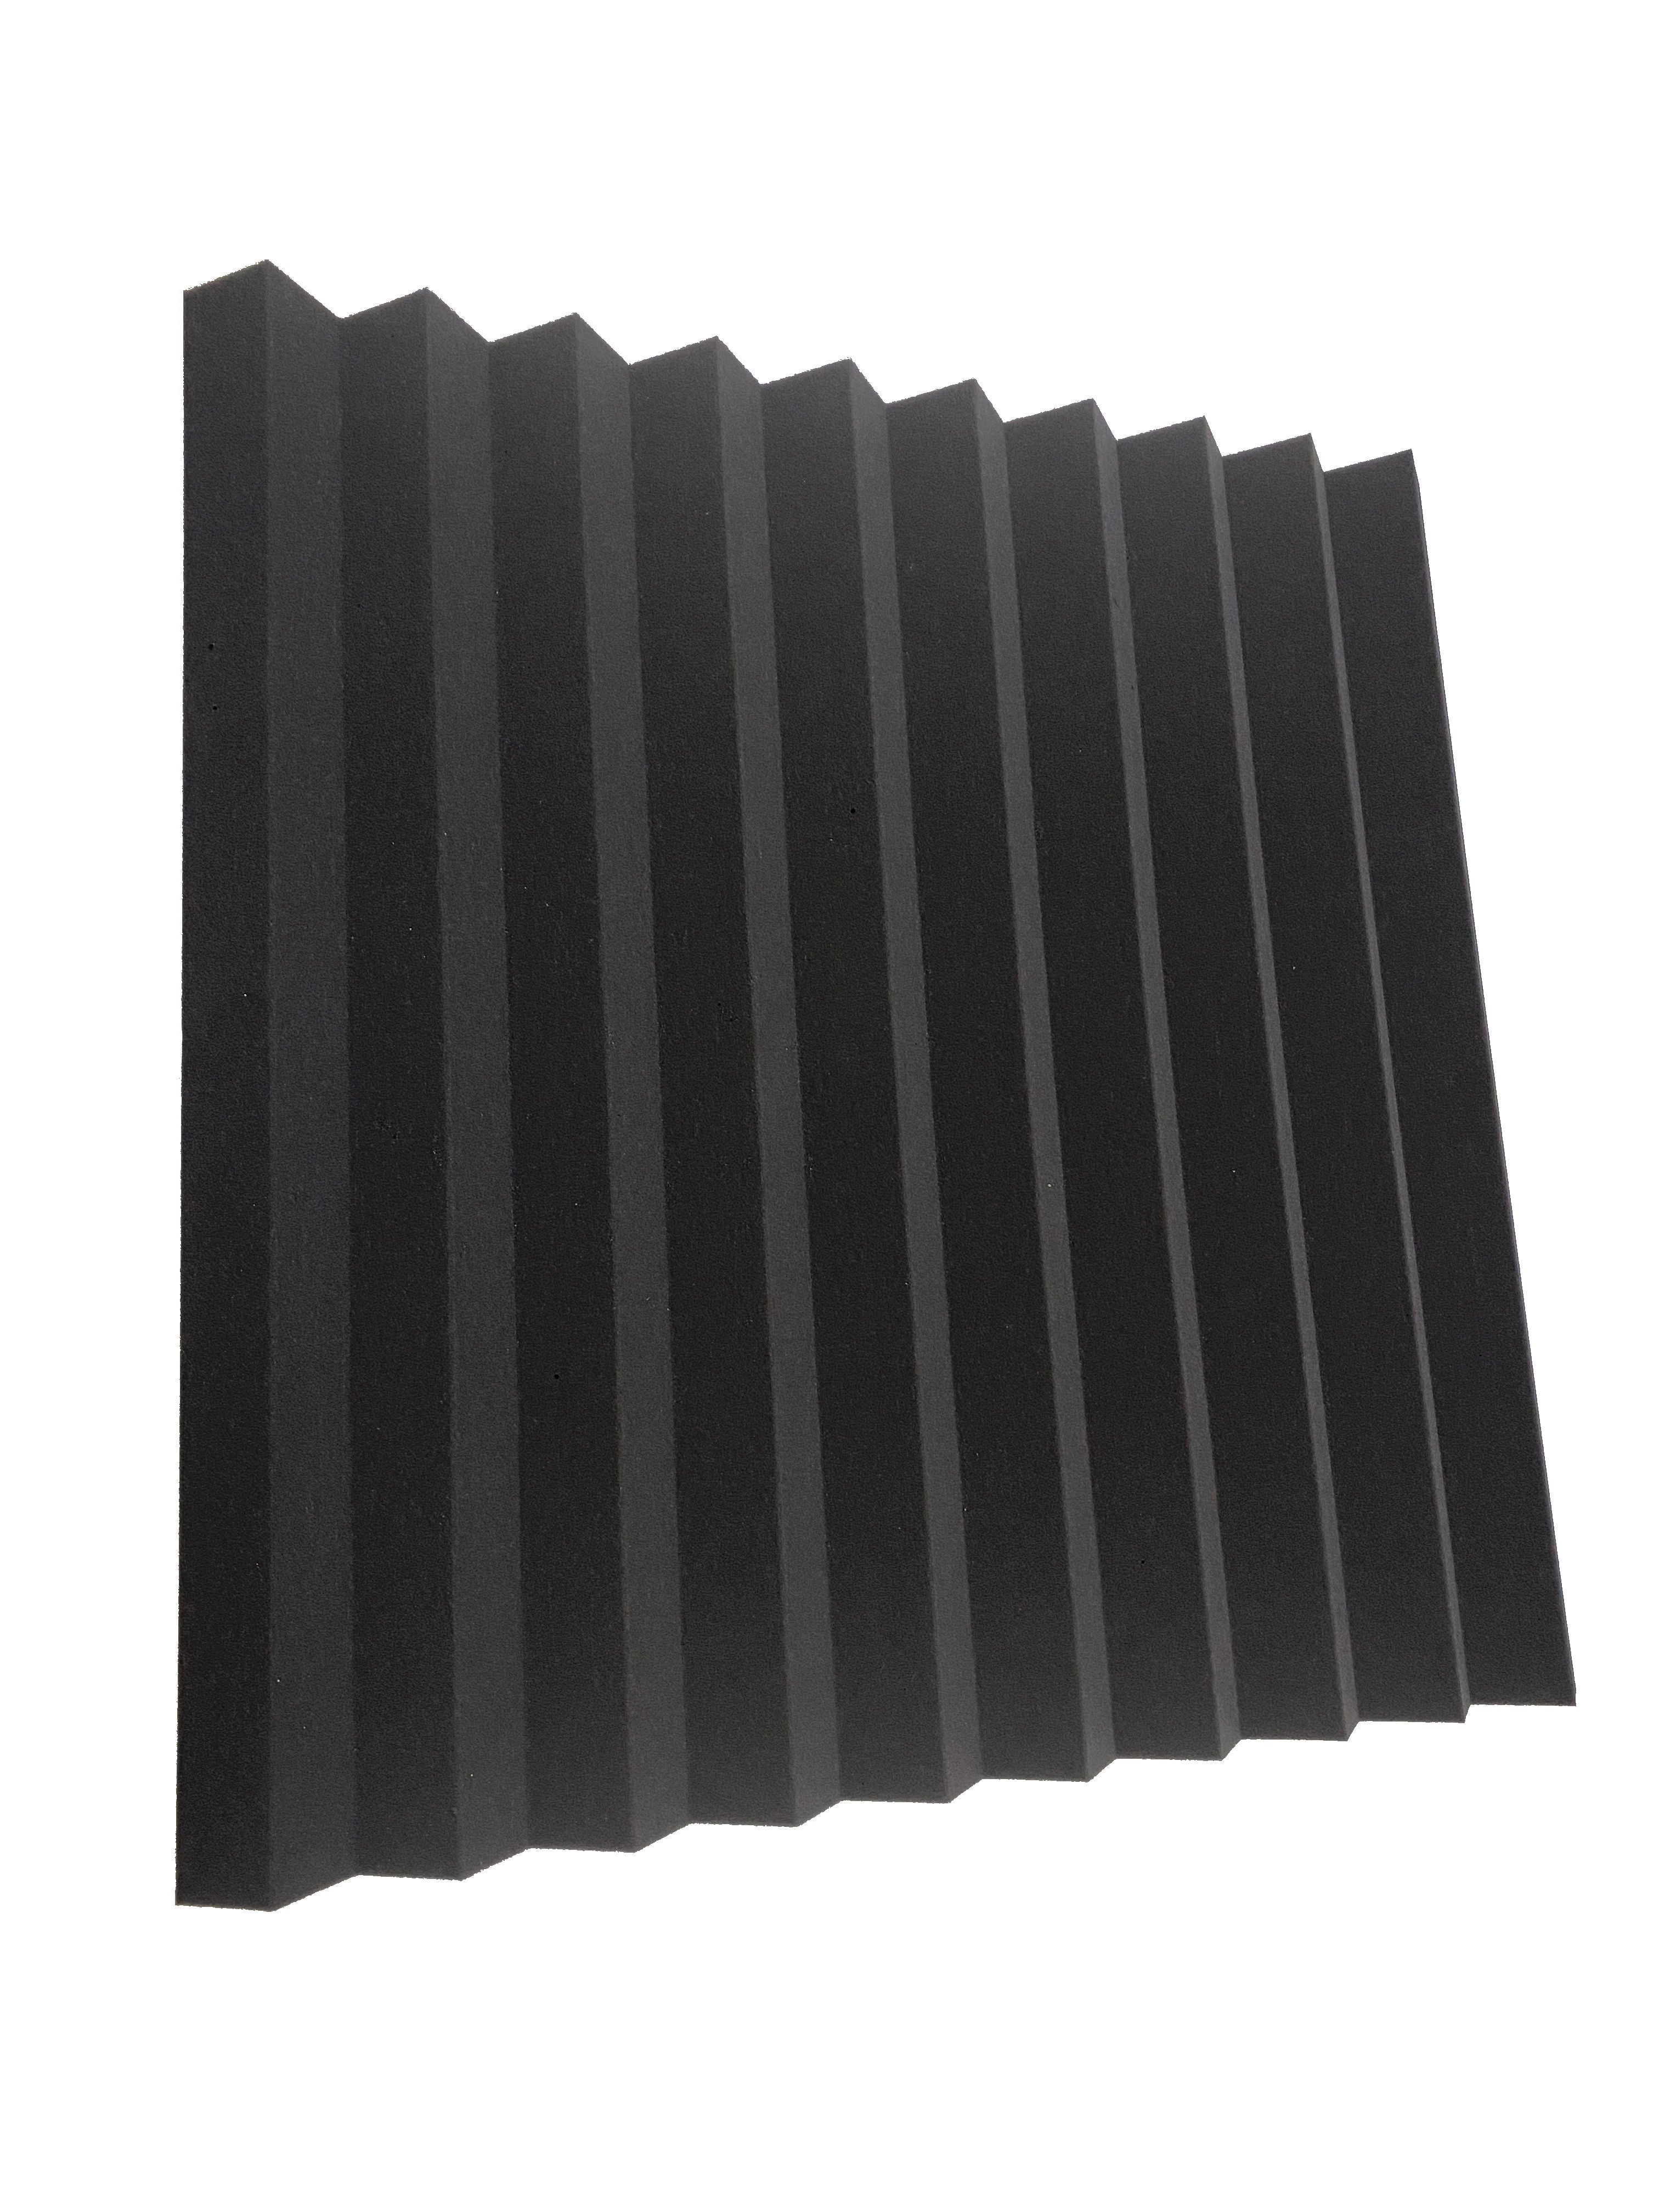 Kaufen dunkelgrau Wedge PRO 76,2 cm Acoustic Studio Foam Tile Pack – 6 Fliesen, 3,48 m² Abdeckung